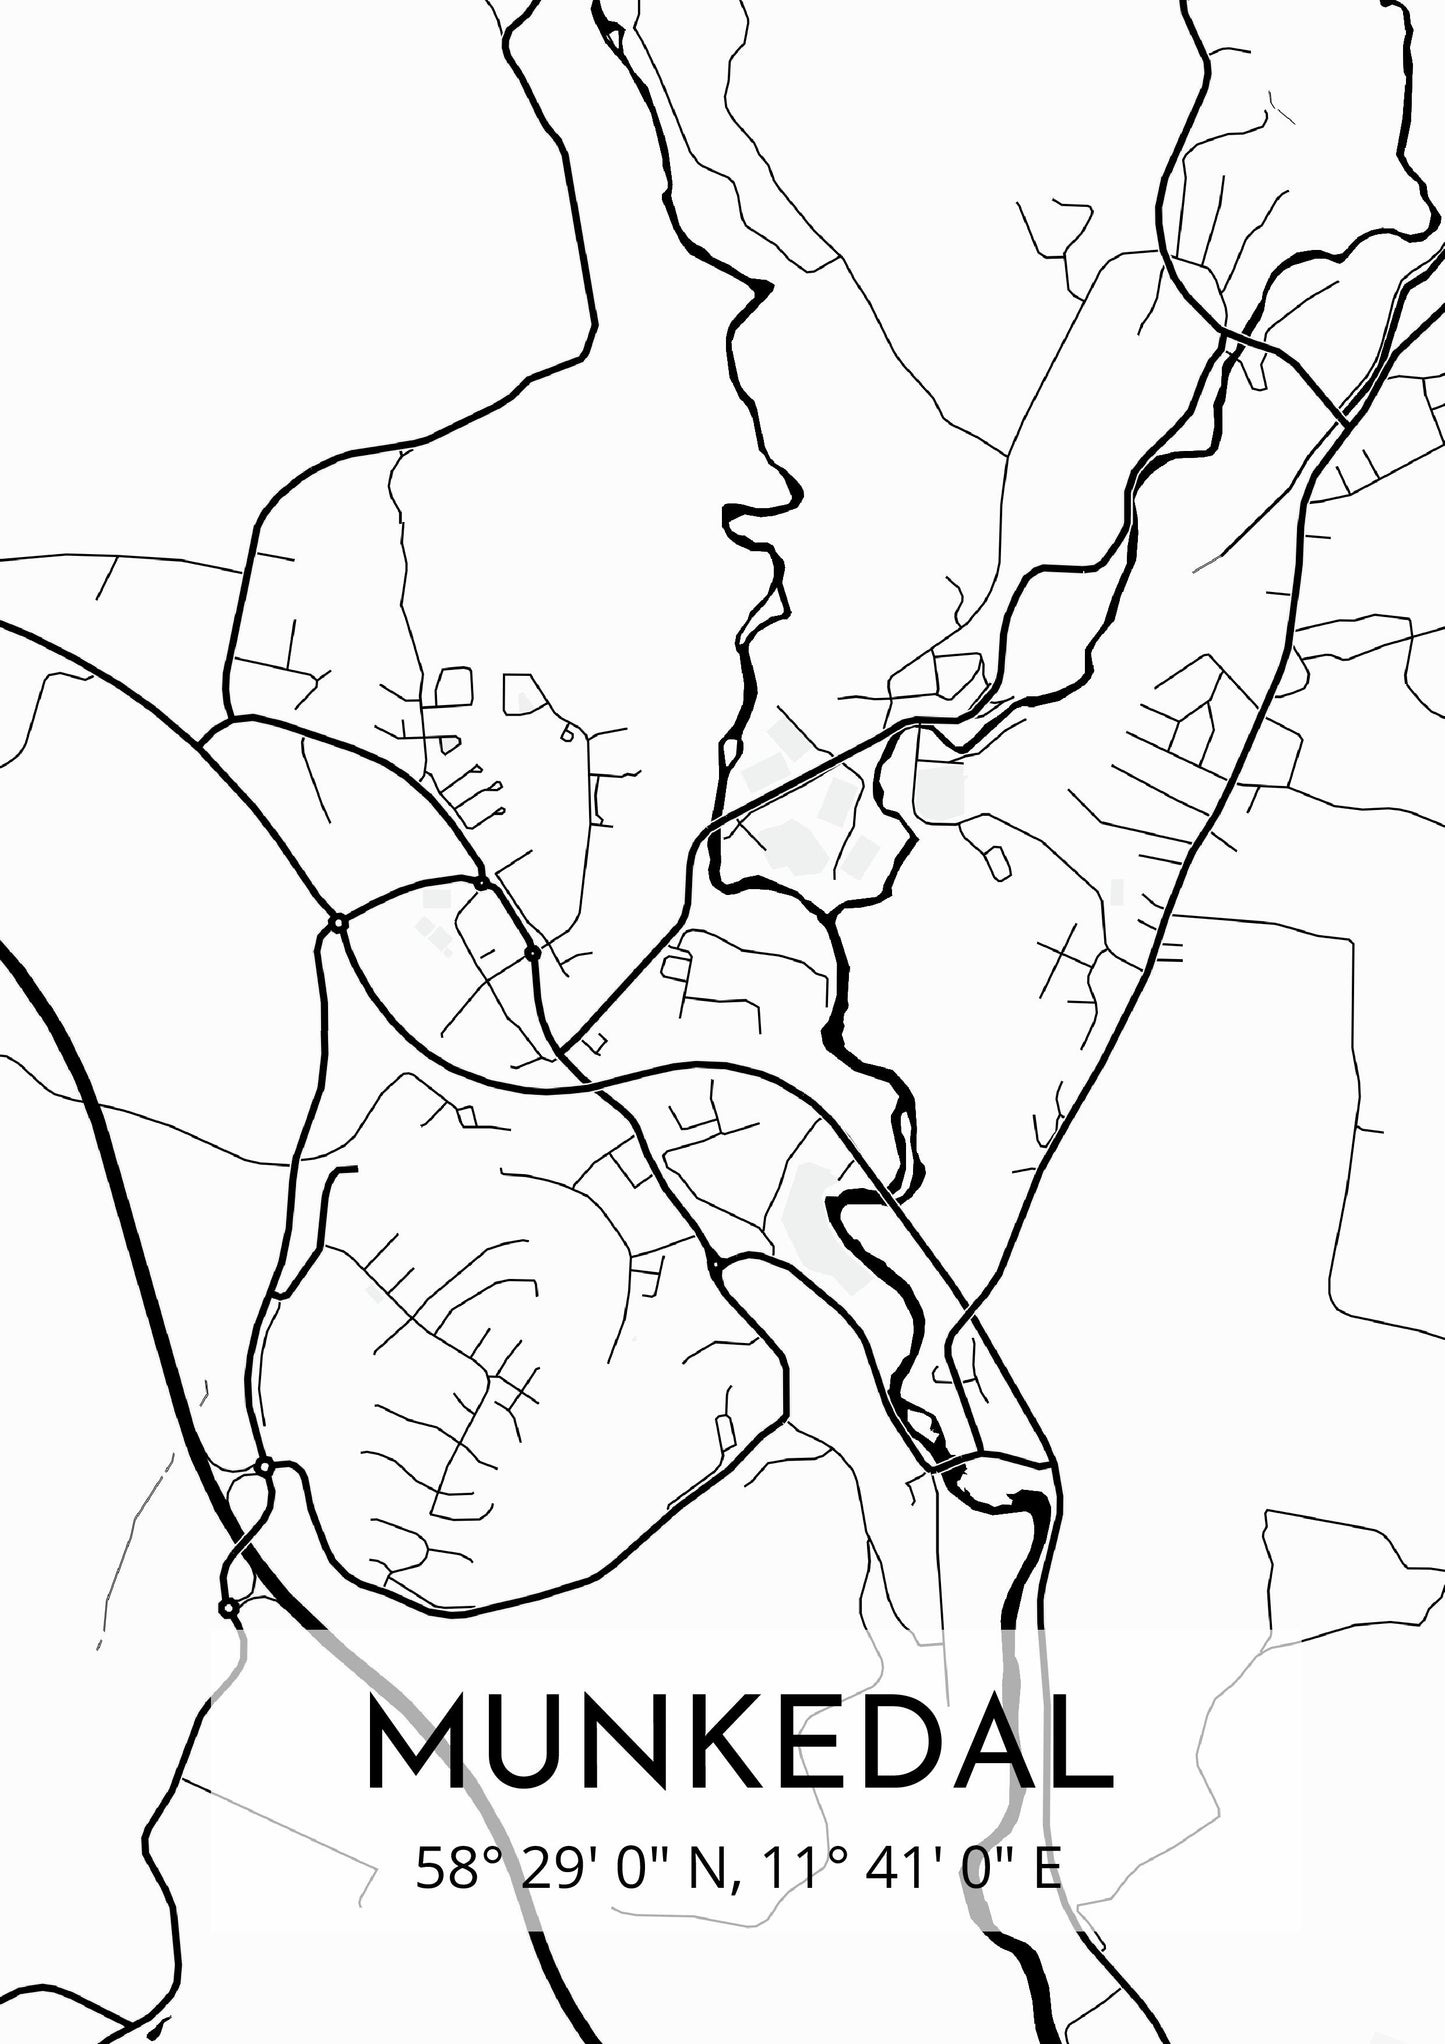 Munkedal